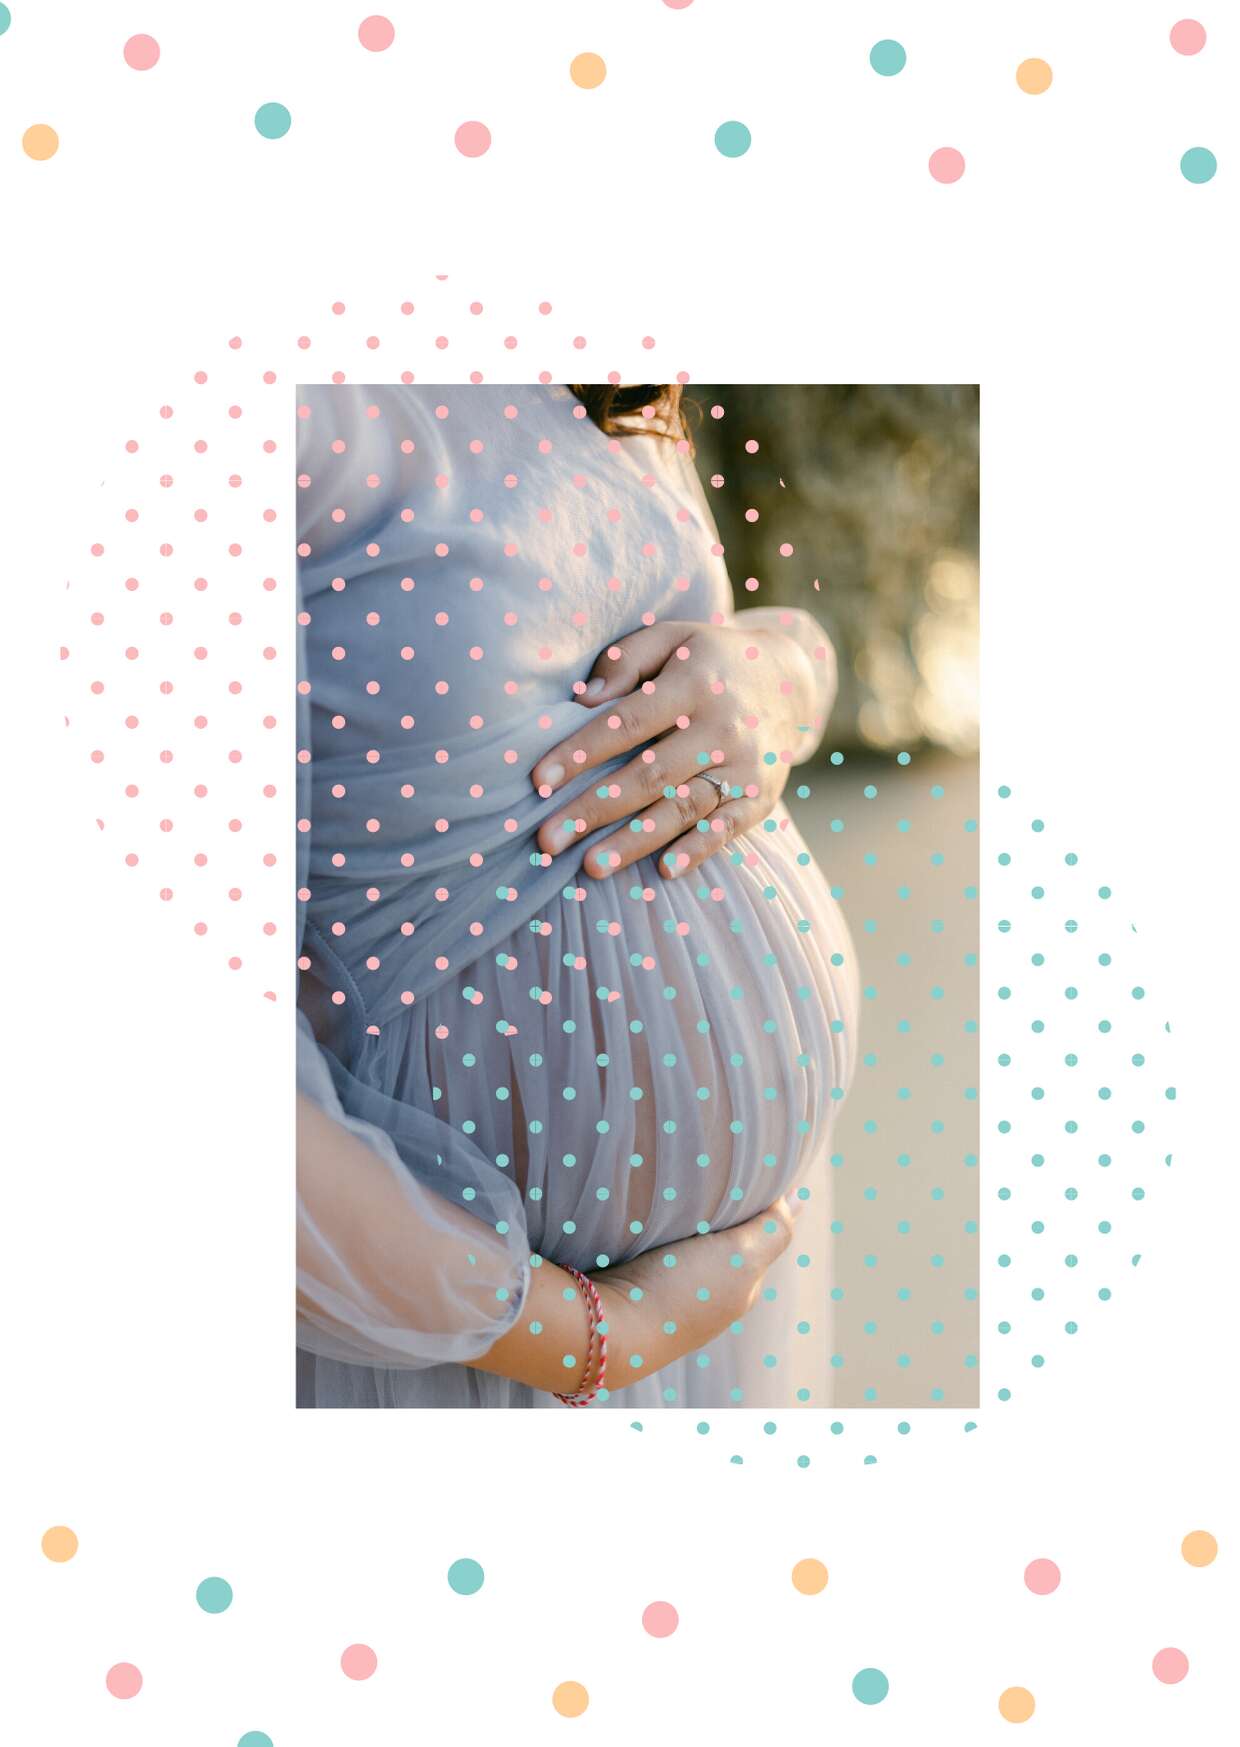 Consulta de control prenatal - Control de embarazo